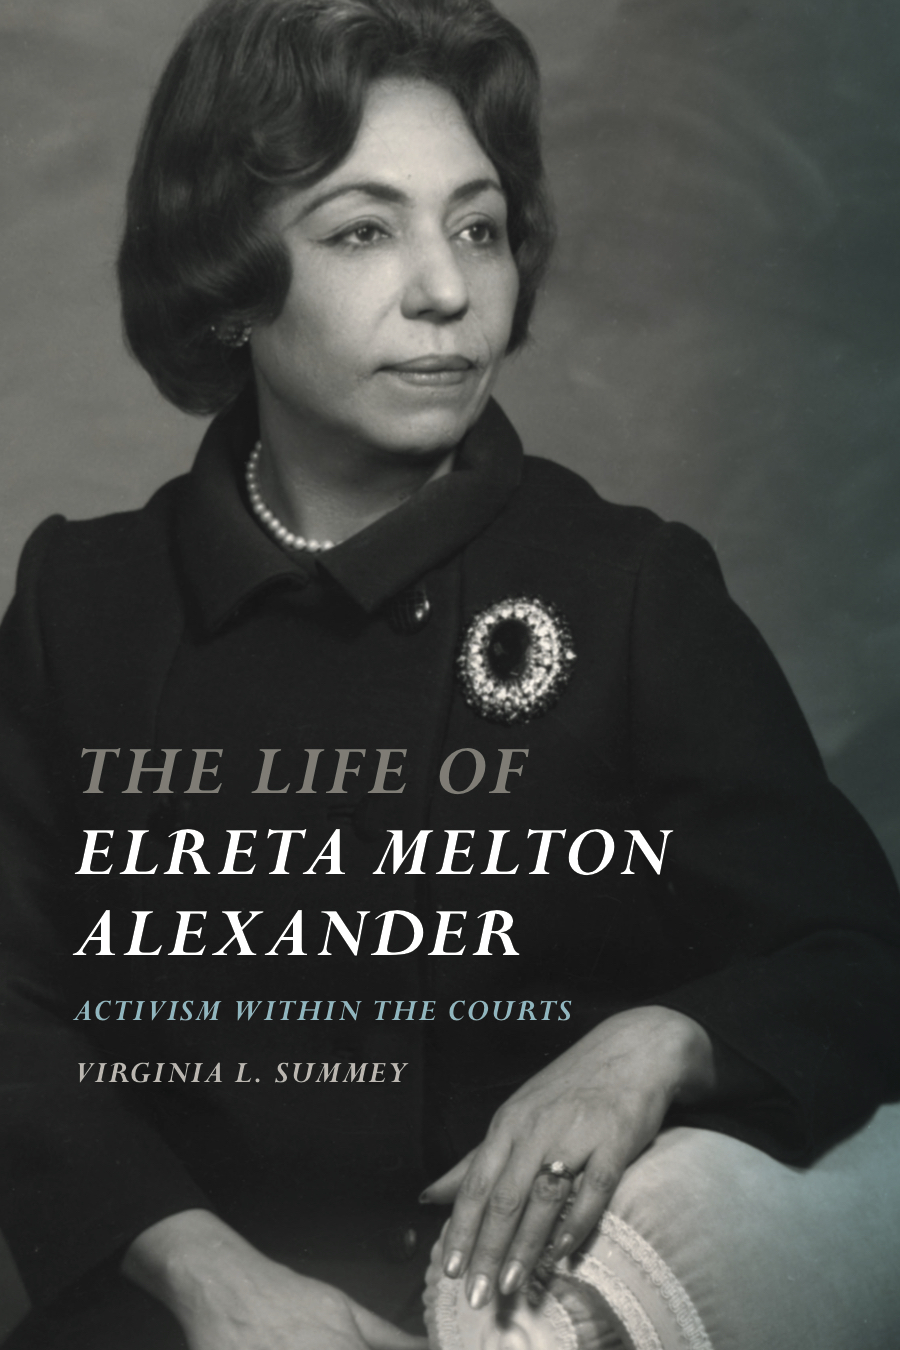 Bookcover image of Elreta Melton Alexander